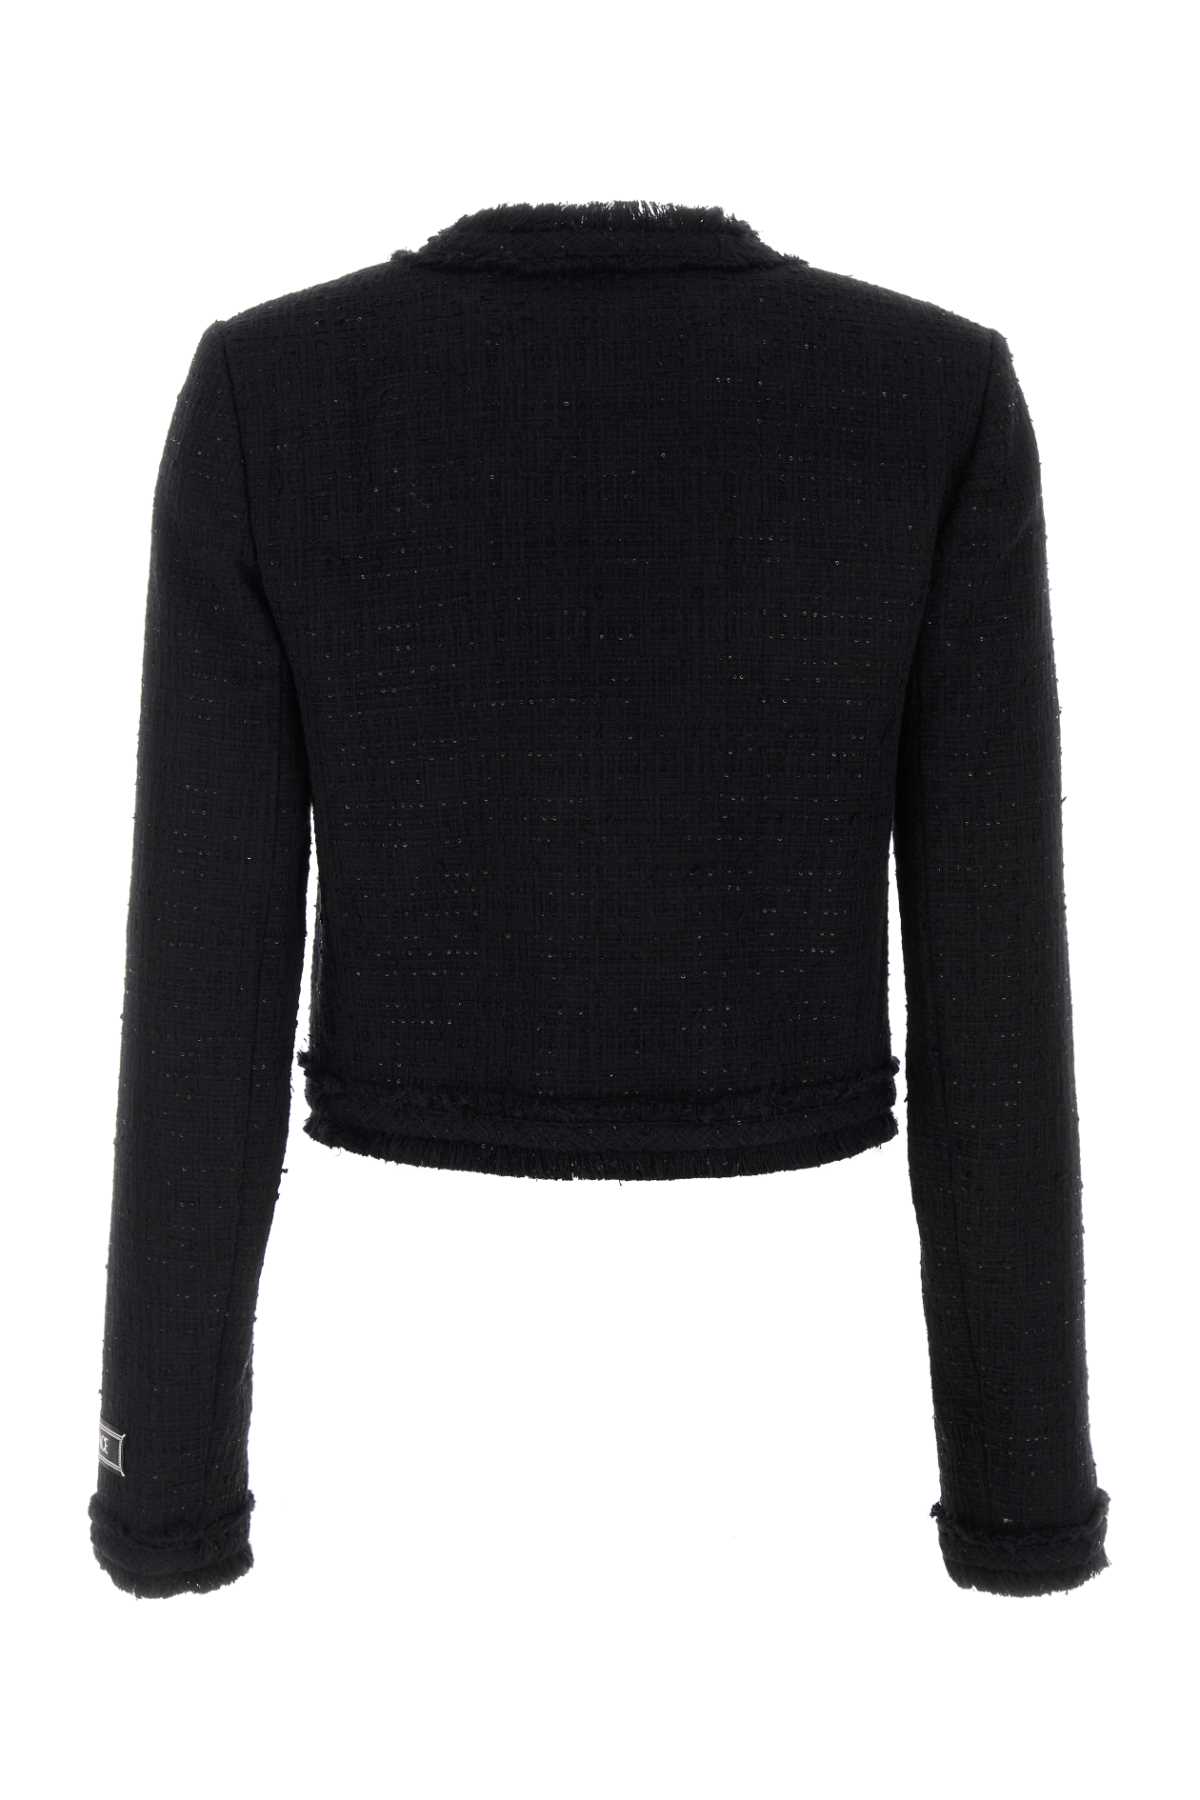 Versace Black Tweed Blazer